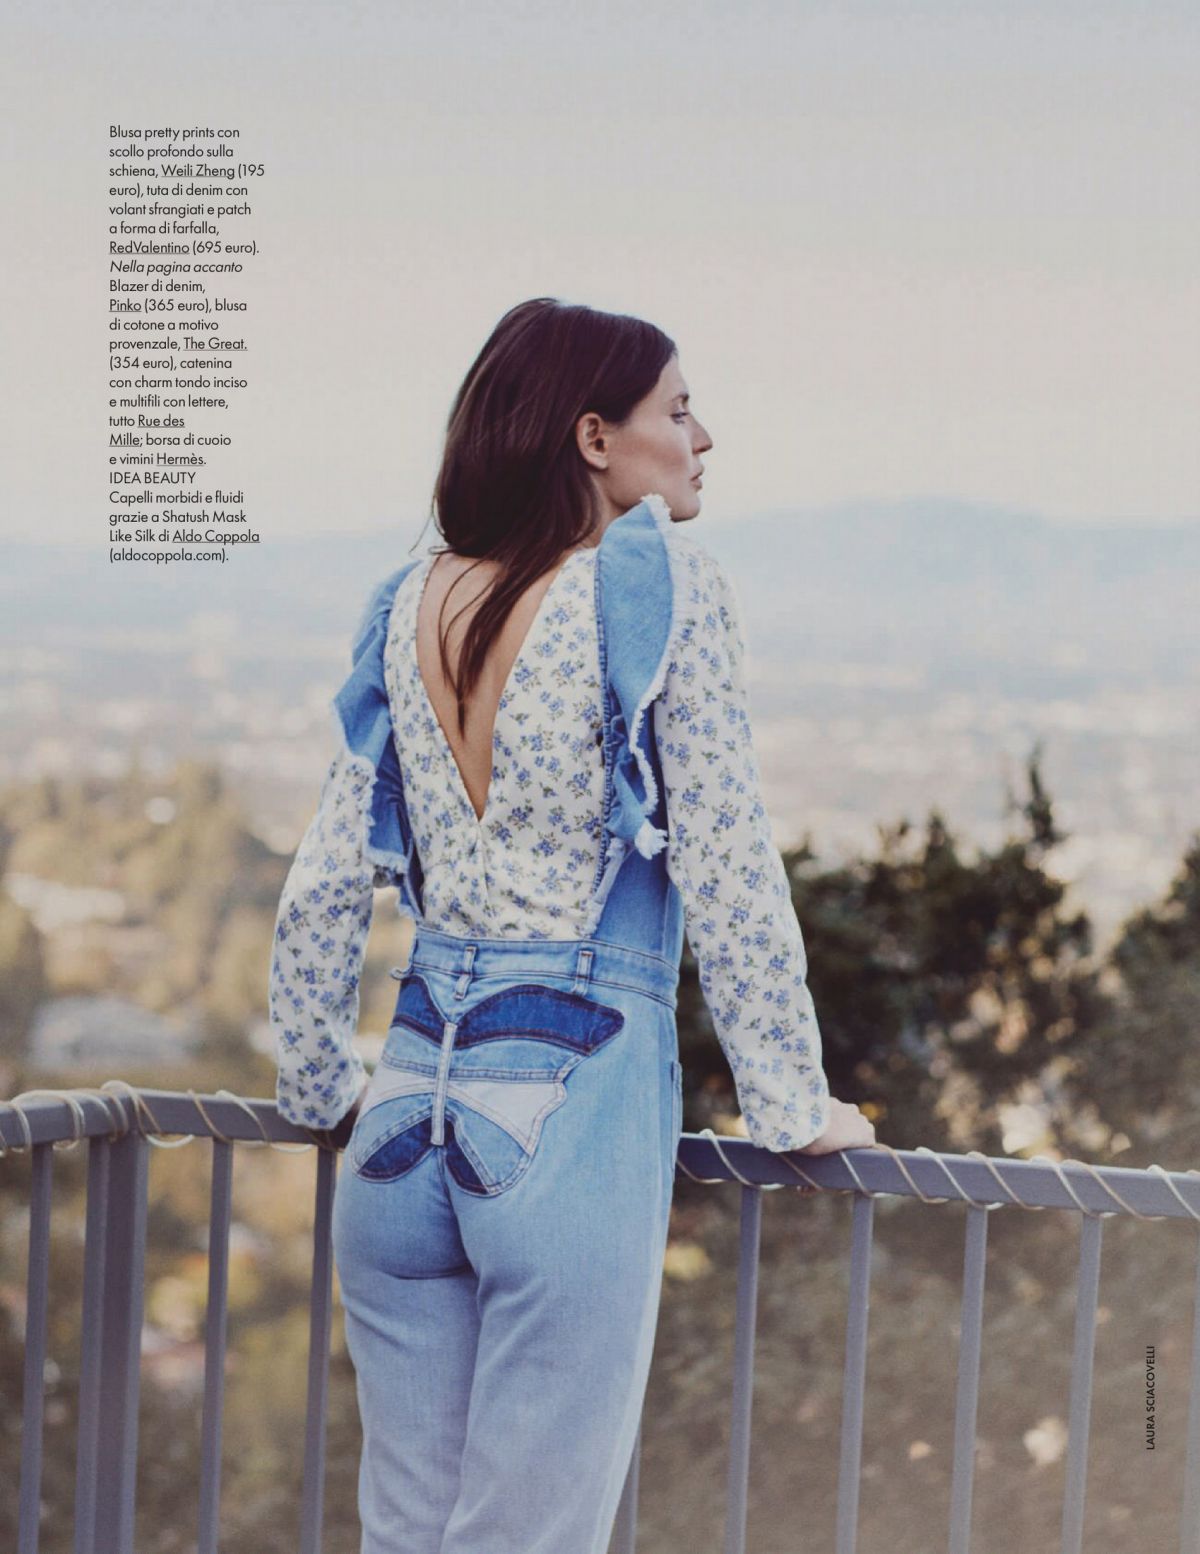 Bianca Balti Photoshoot in Elle Magazine, Italy June 2020 Issue